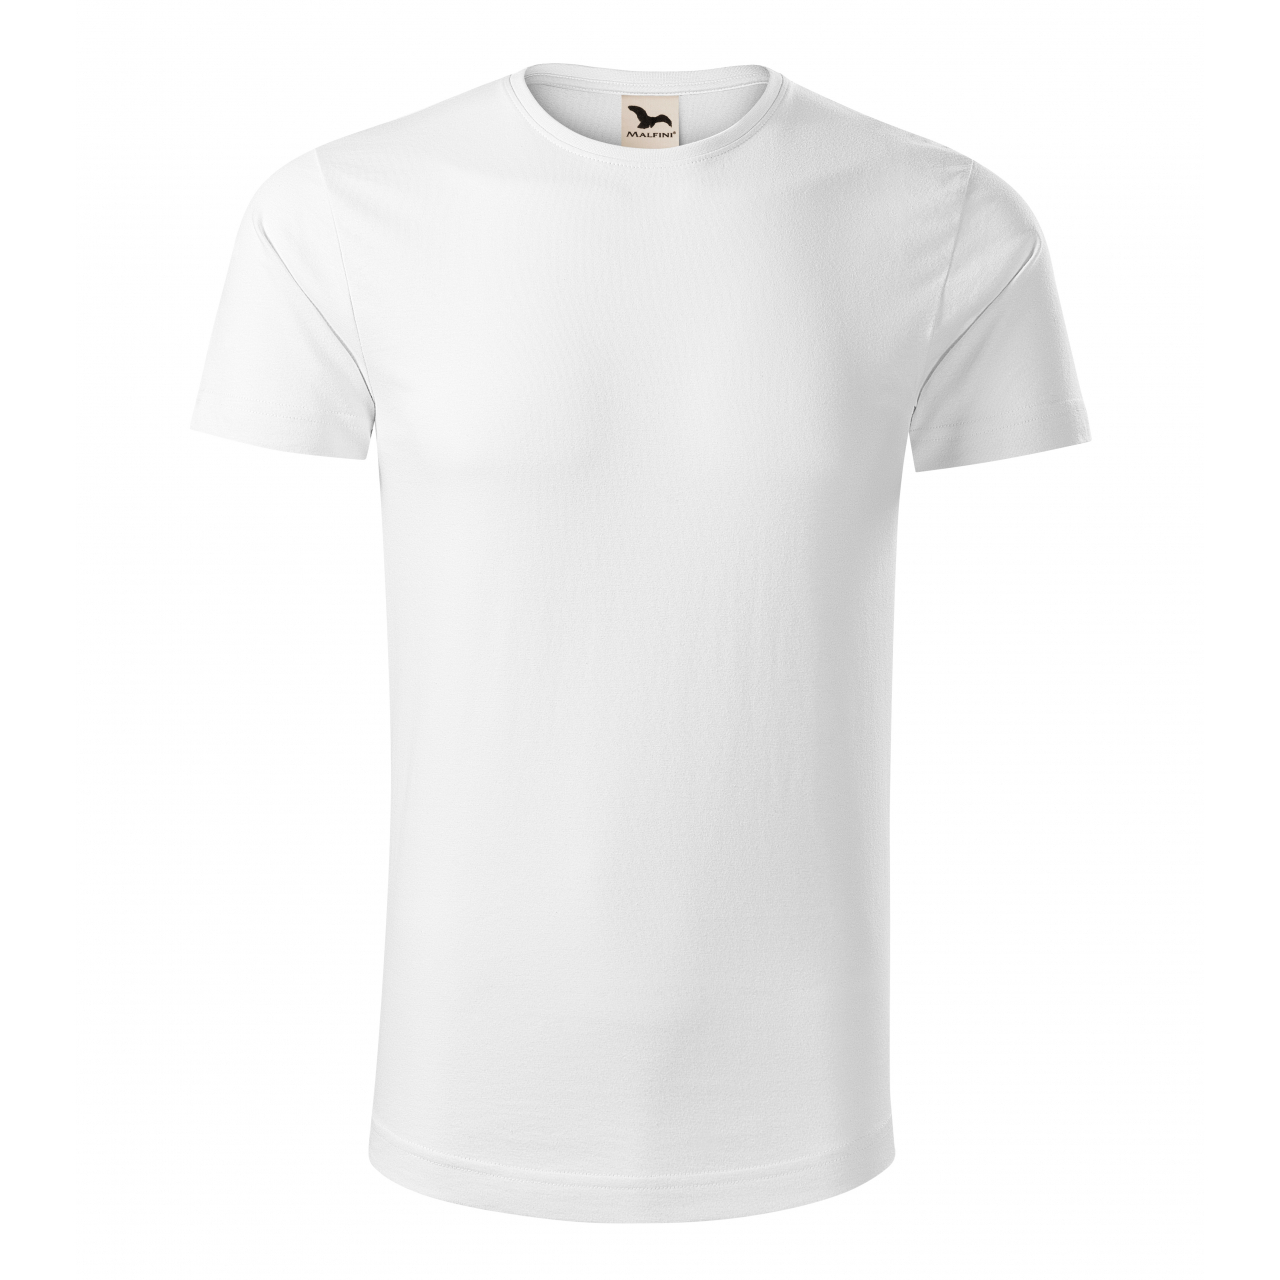 Tričko pánské Malfini Origin - bílé, XL